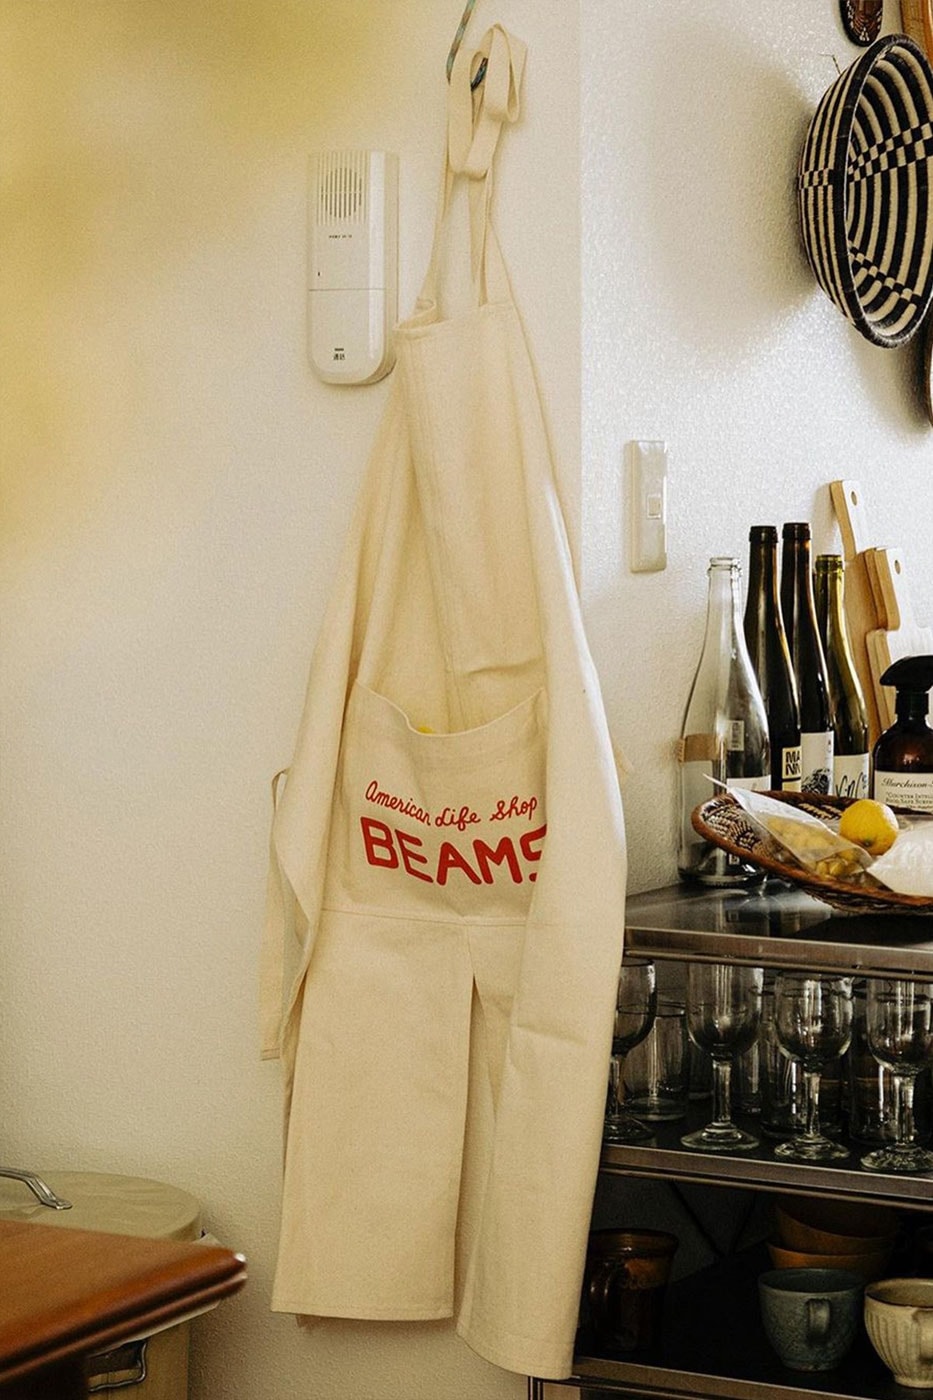 BEAMS Launches 45th Anniversary Home Goods 1976 150 locations towels alarm clock crate coffe mug apparel homeware Harajuku retro logo font bandana release info